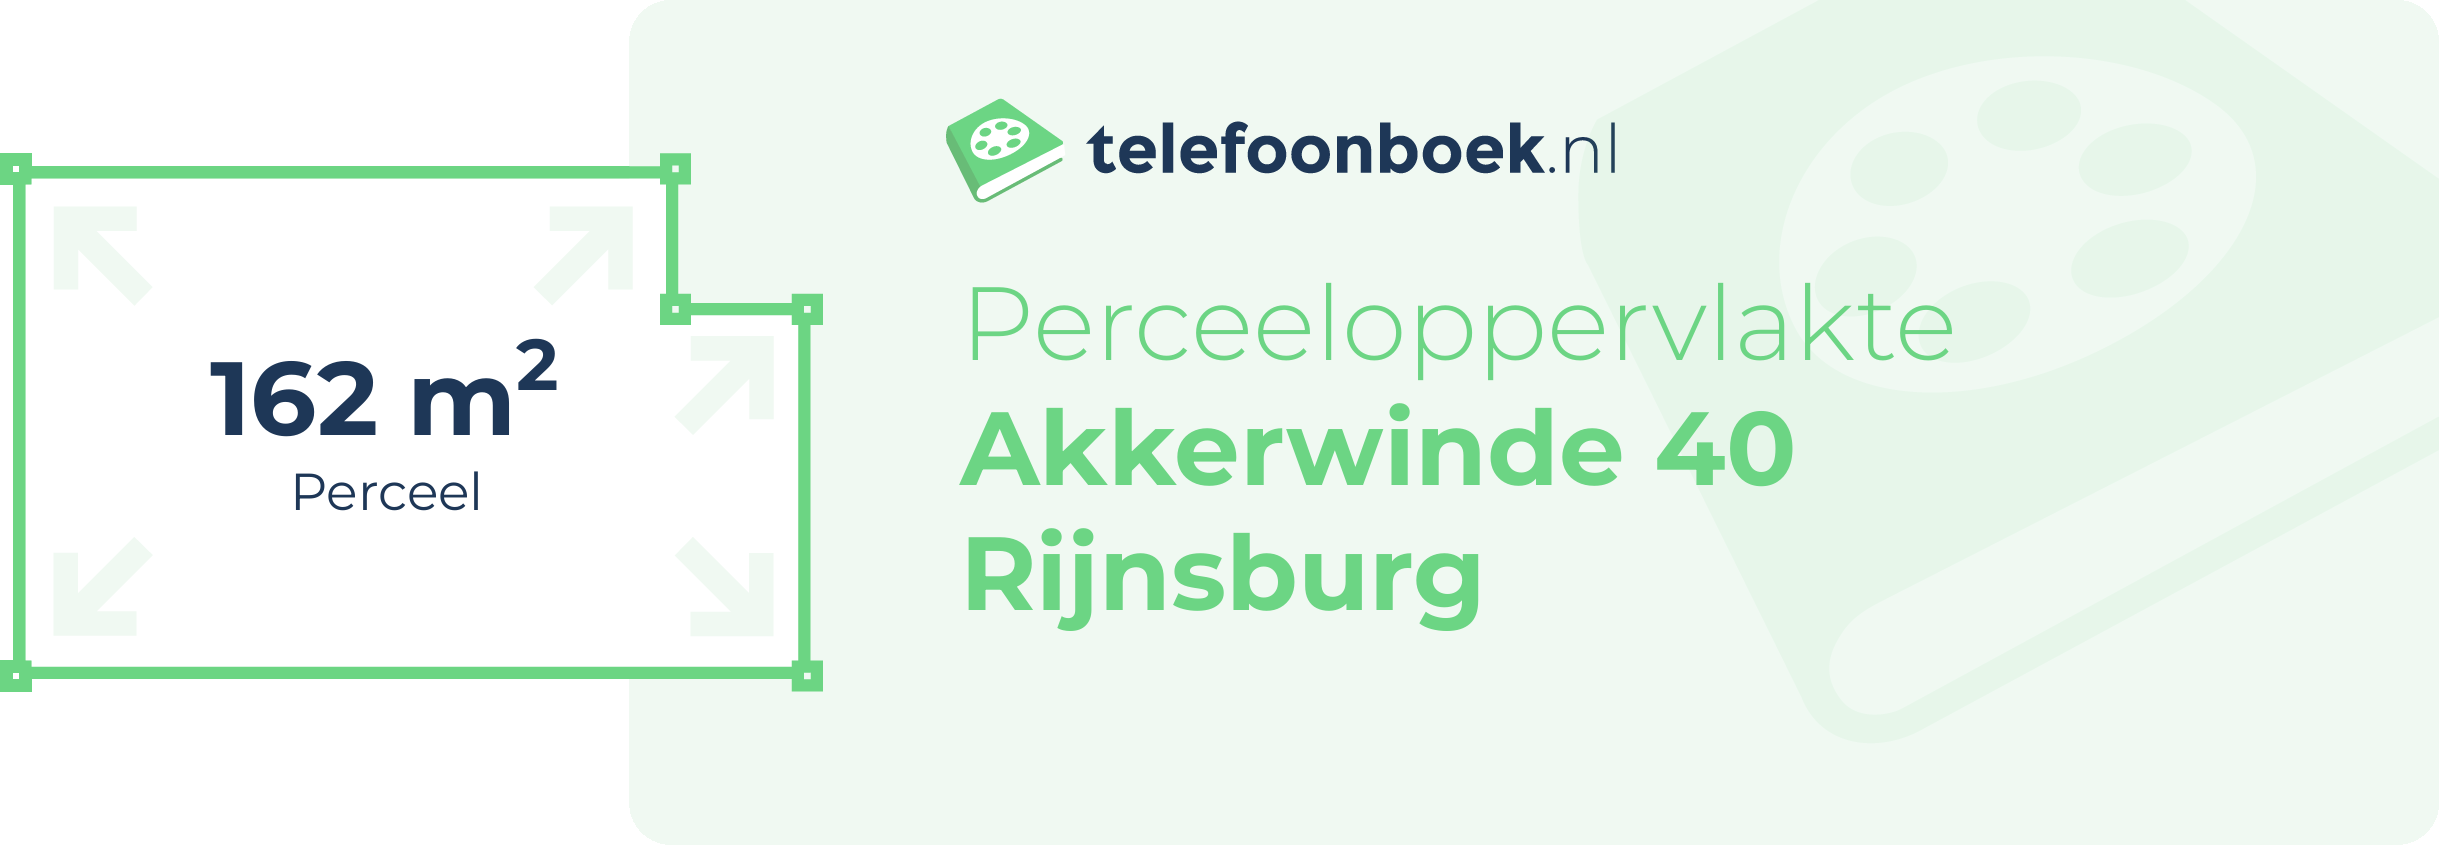 Perceeloppervlakte Akkerwinde 40 Rijnsburg